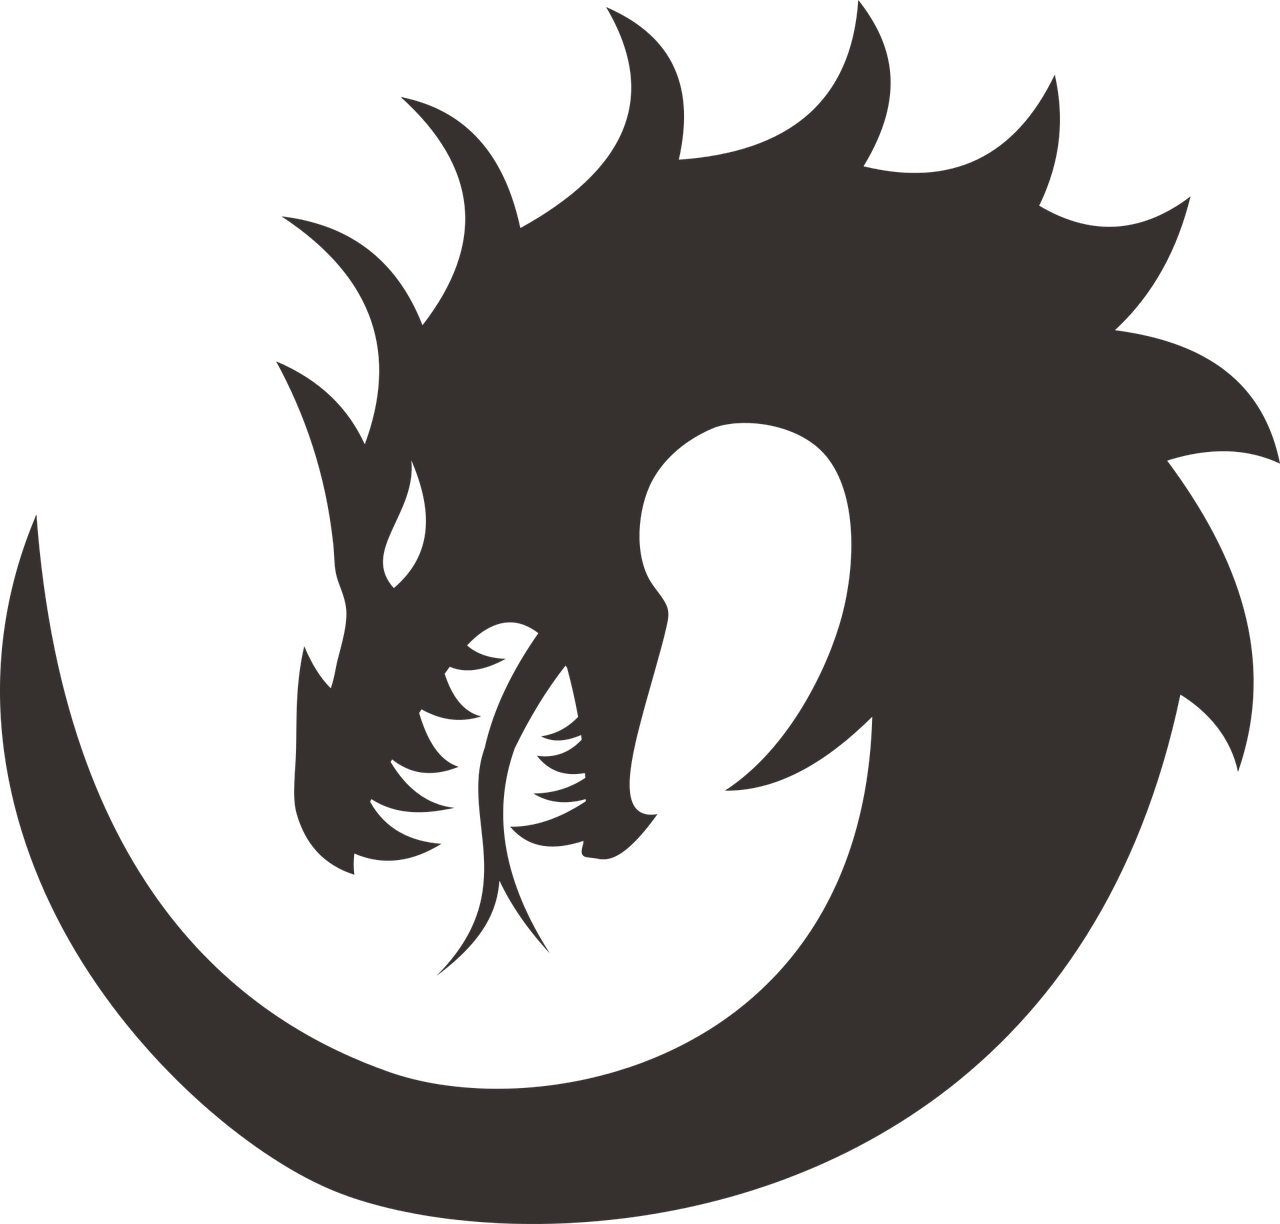 Ouroboros Dragon PNG Free File Download